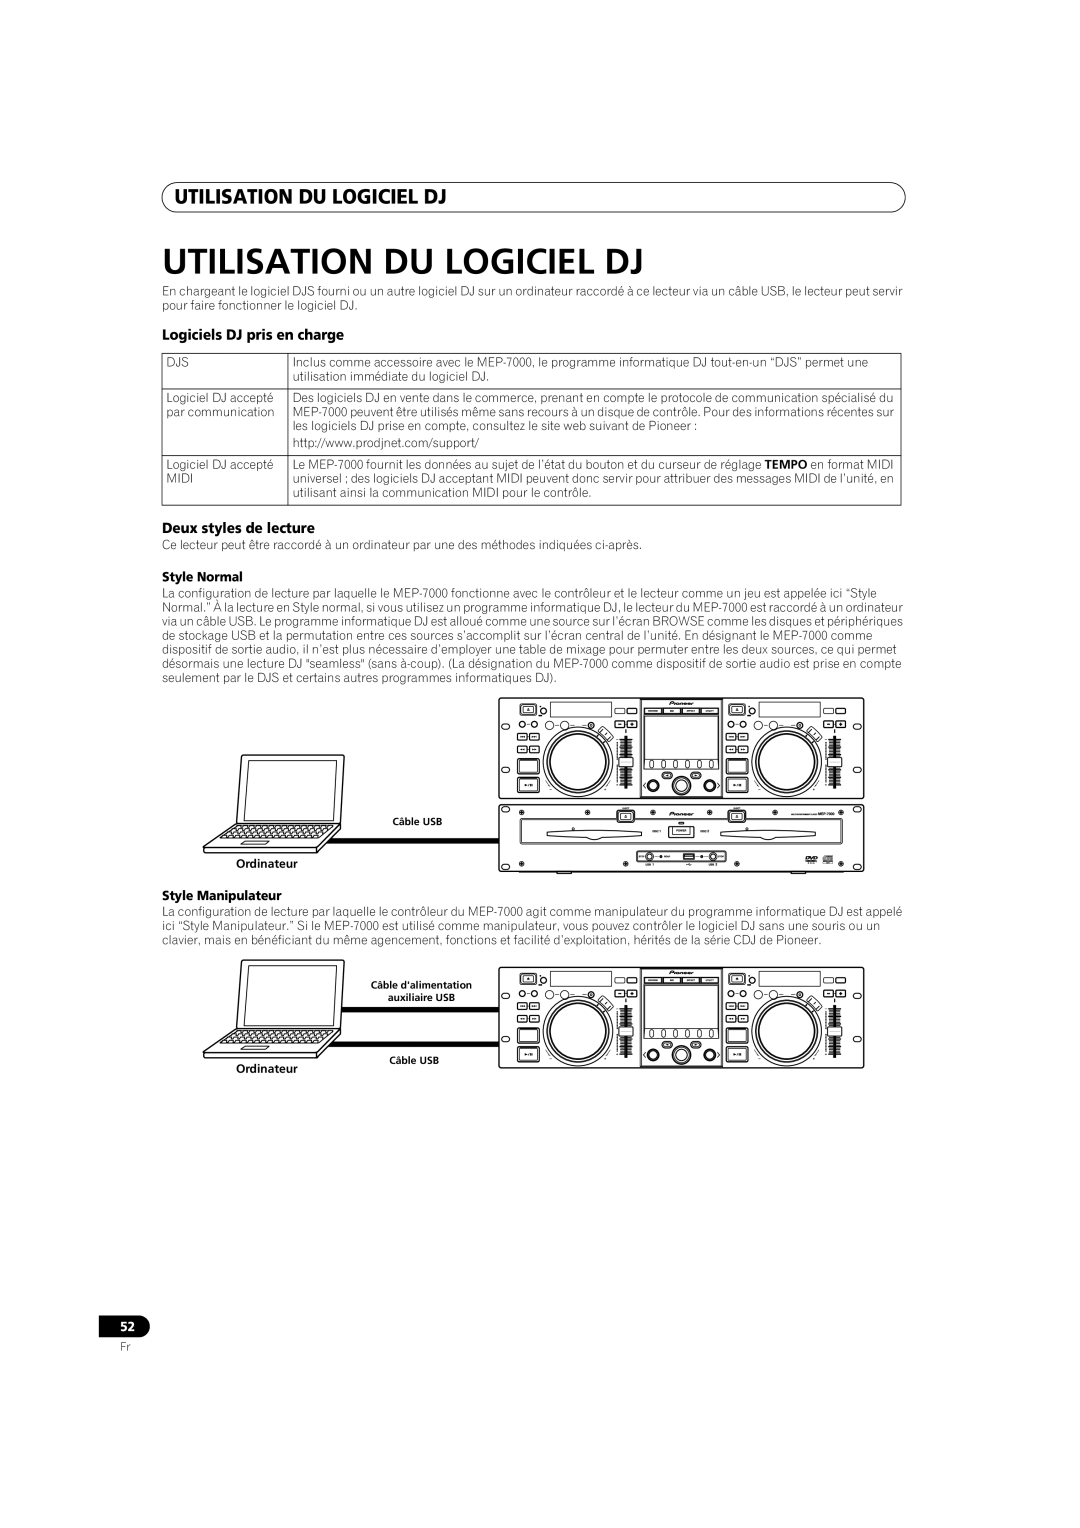 Pioneer MEP-7000 operating instructions Utilisation Du Logiciel Dj, Style Normal, Style Manipulateur 